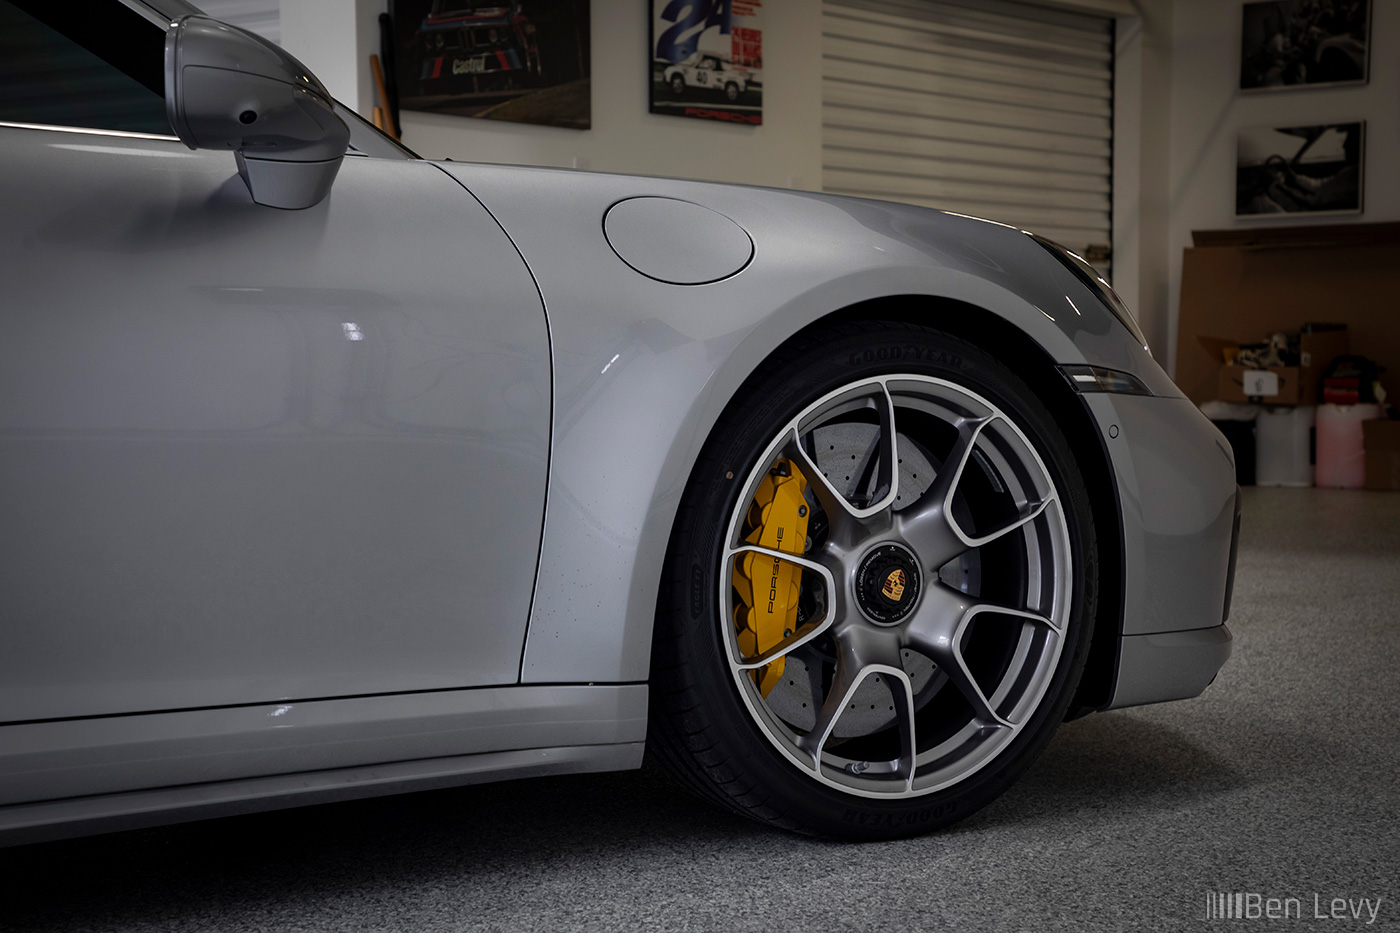 Front Wheel of Silver Porsche 911 Turbo